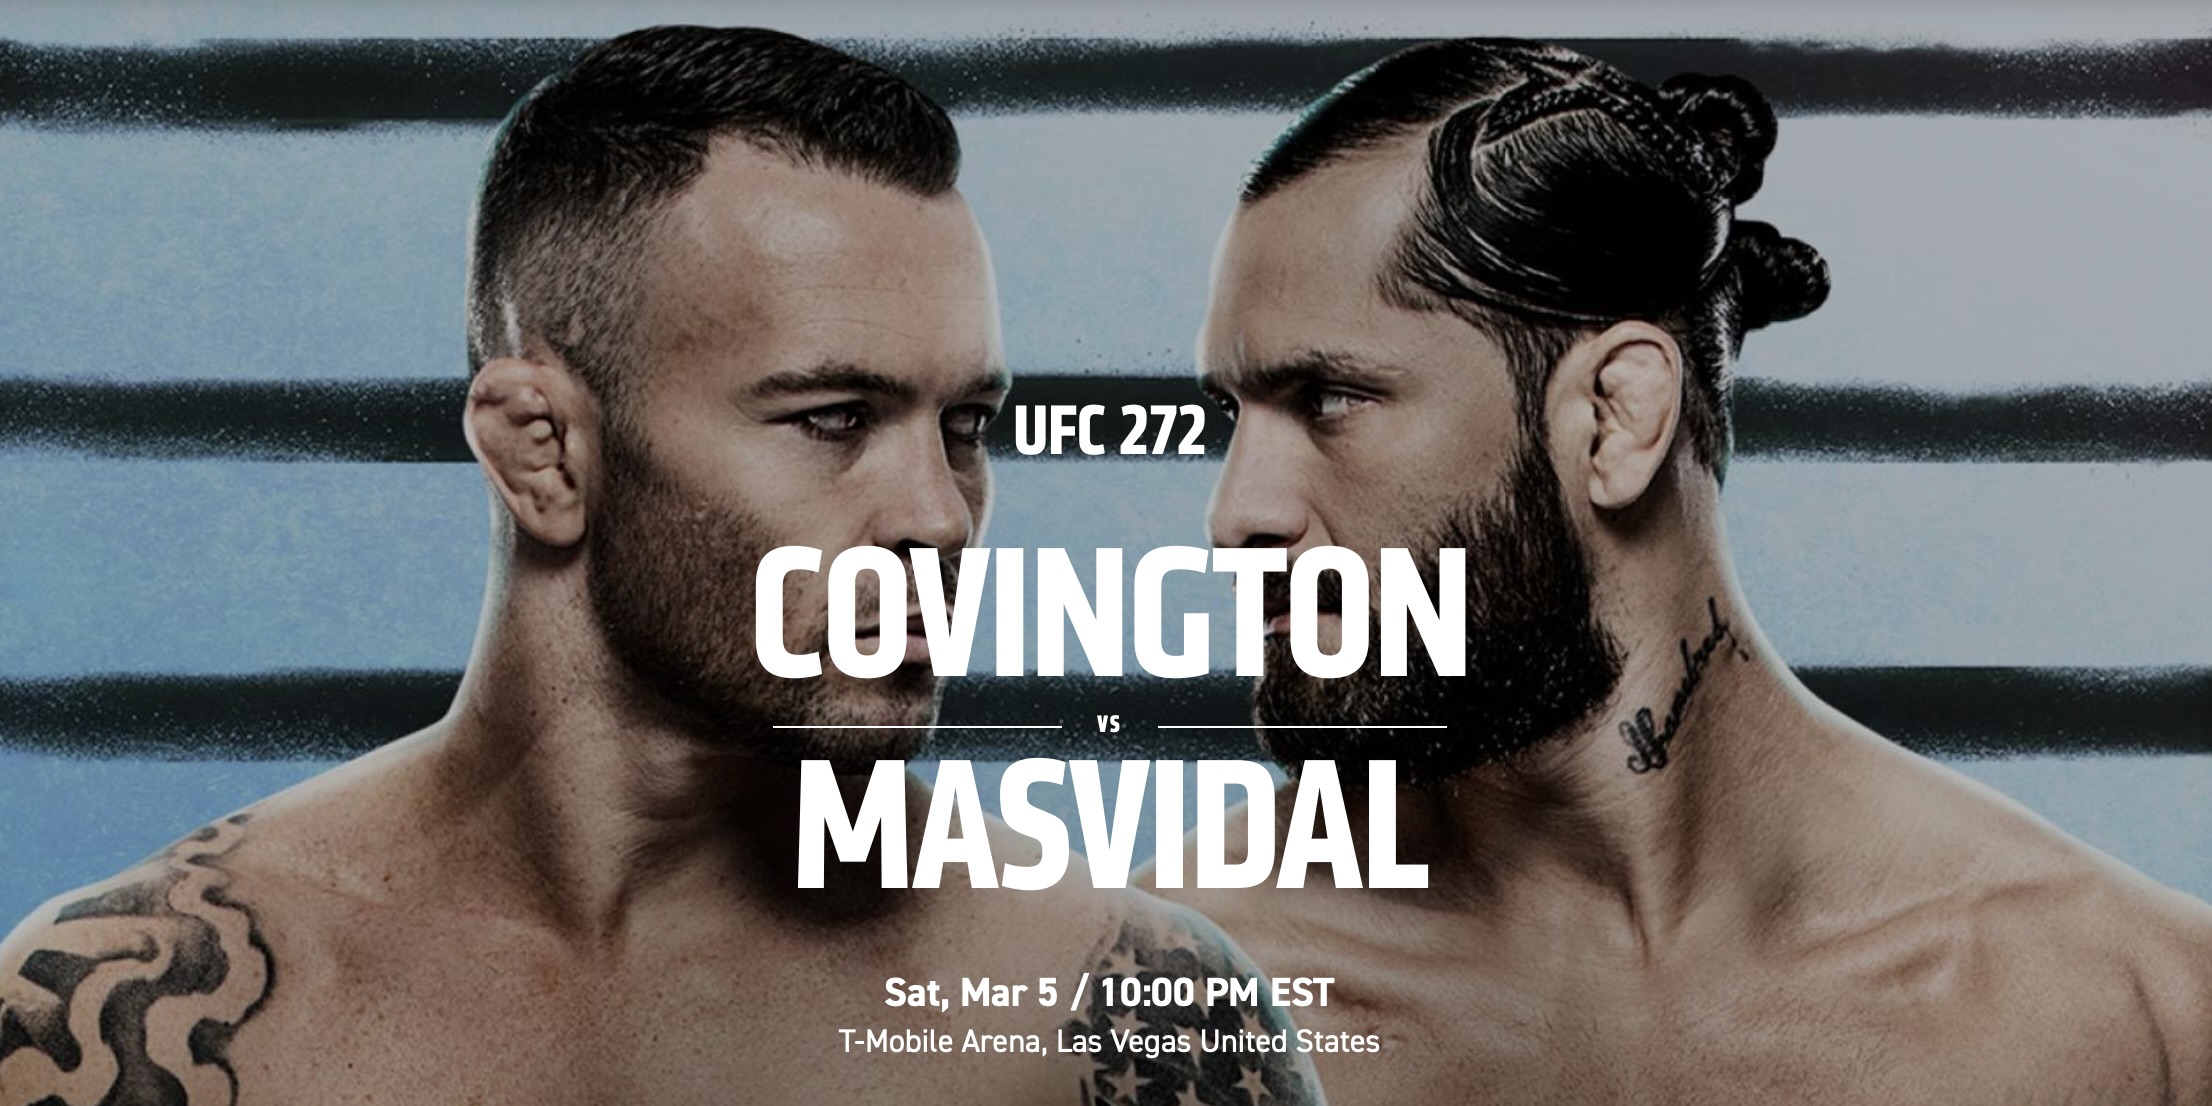 How to watch UFC 272 Covington vs Masvidal on iPhone, web